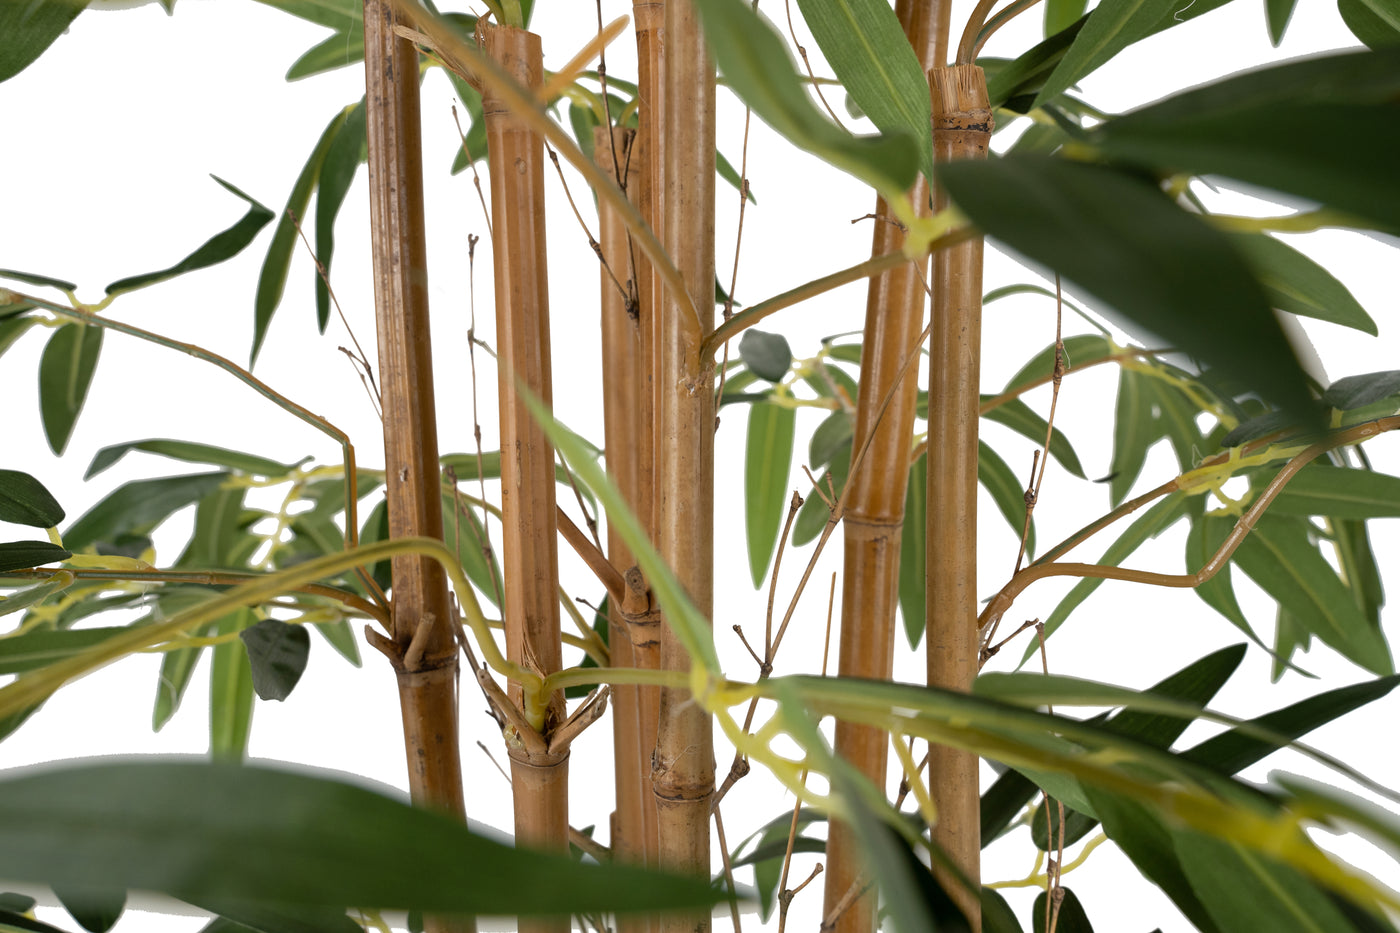 Bambus artificial H120cm cu 864 frunze